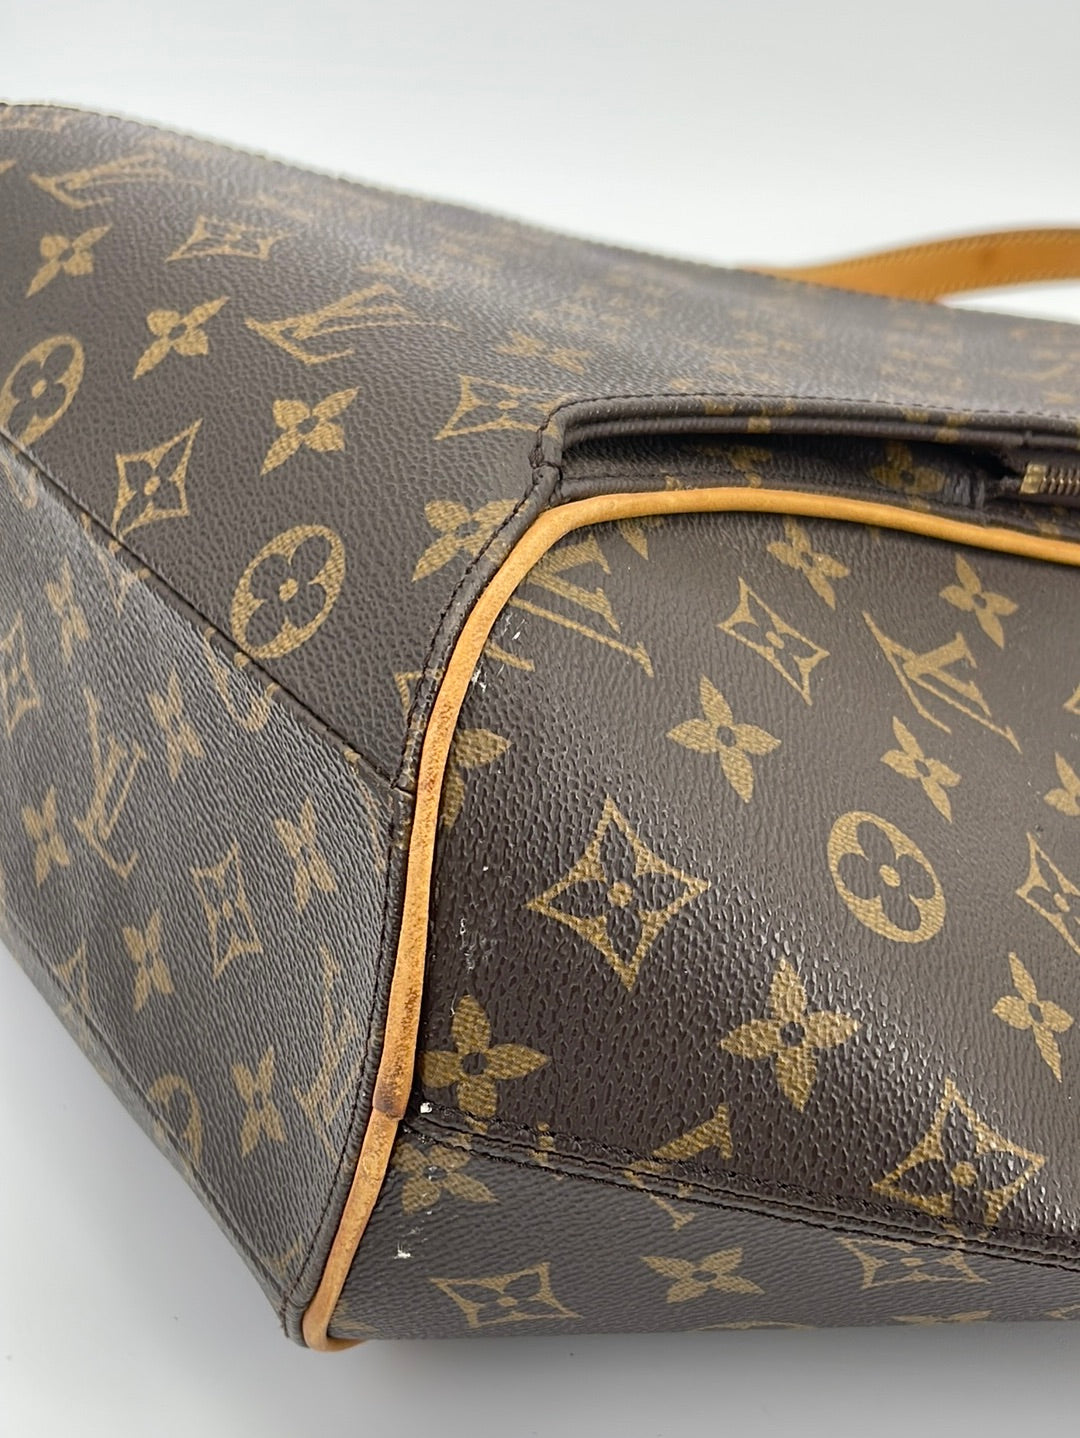 Sold at Auction: Vintage Louis Vuitton 'Ellipse' Backpack